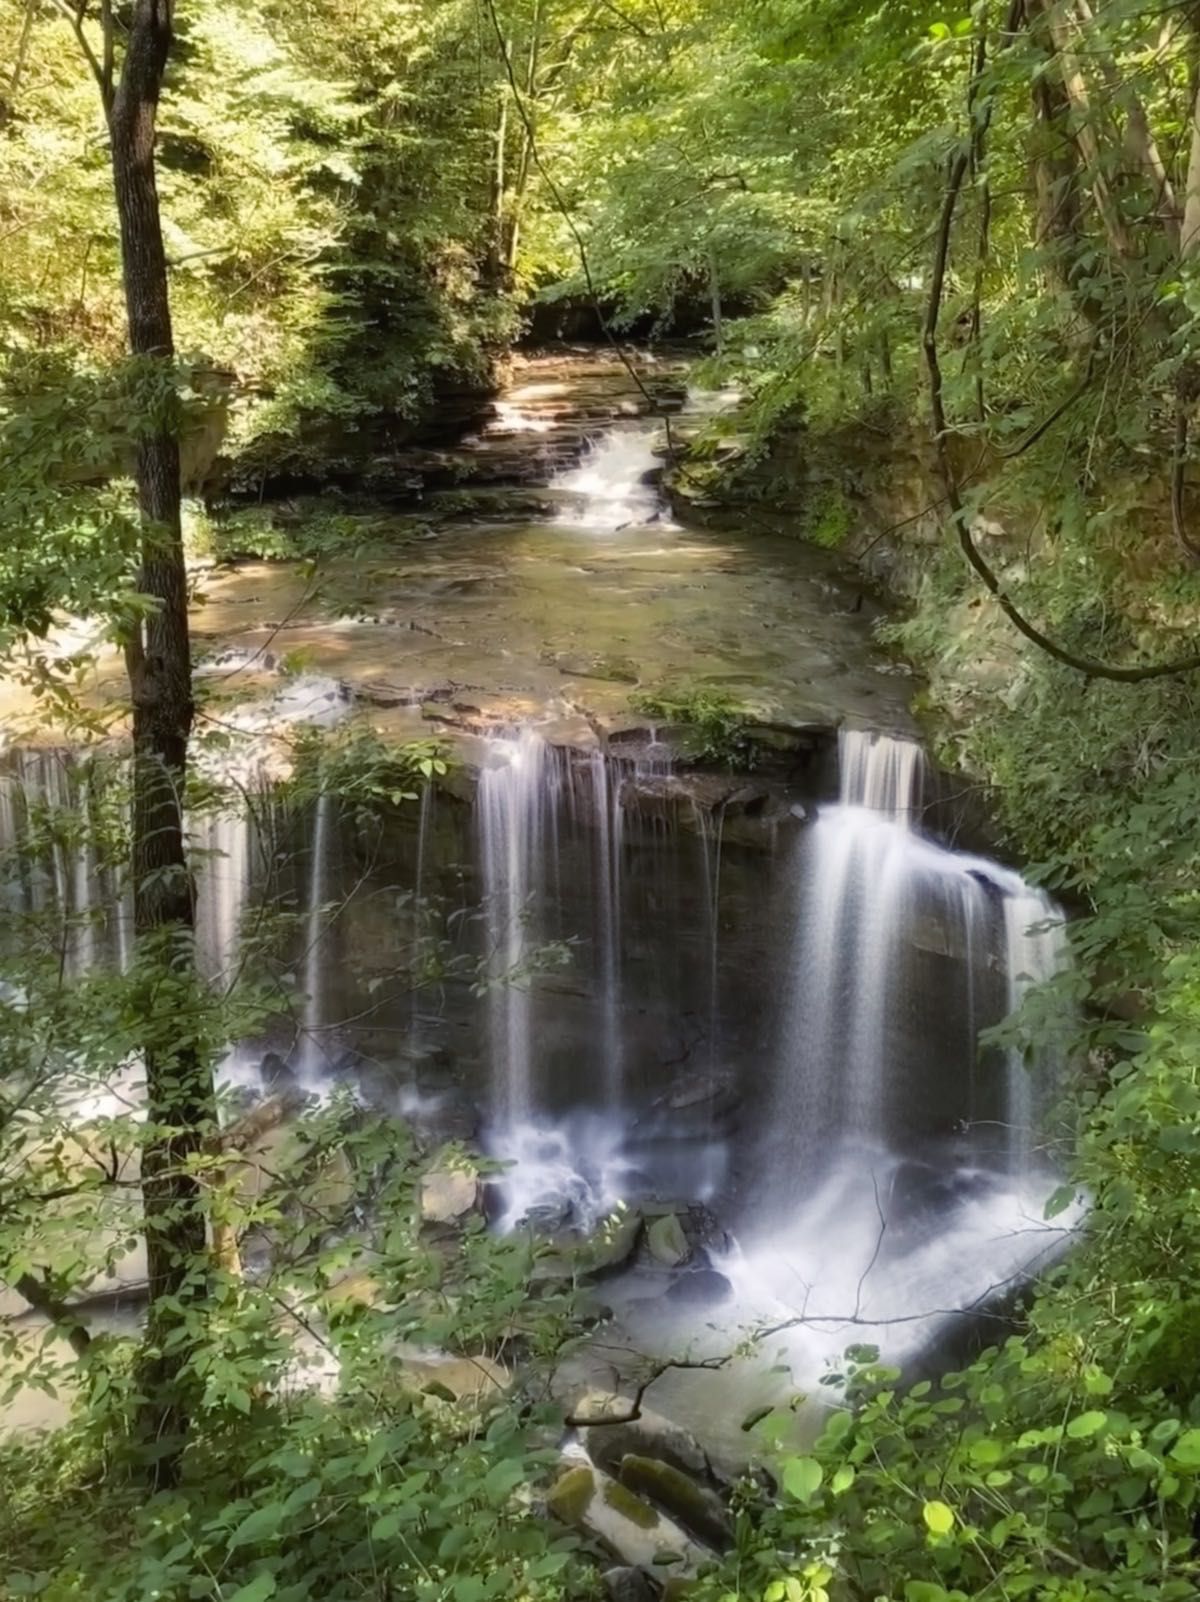 Waterfall at Mill Spring near Monticello, Kentucky. Civil war battleground nearby.